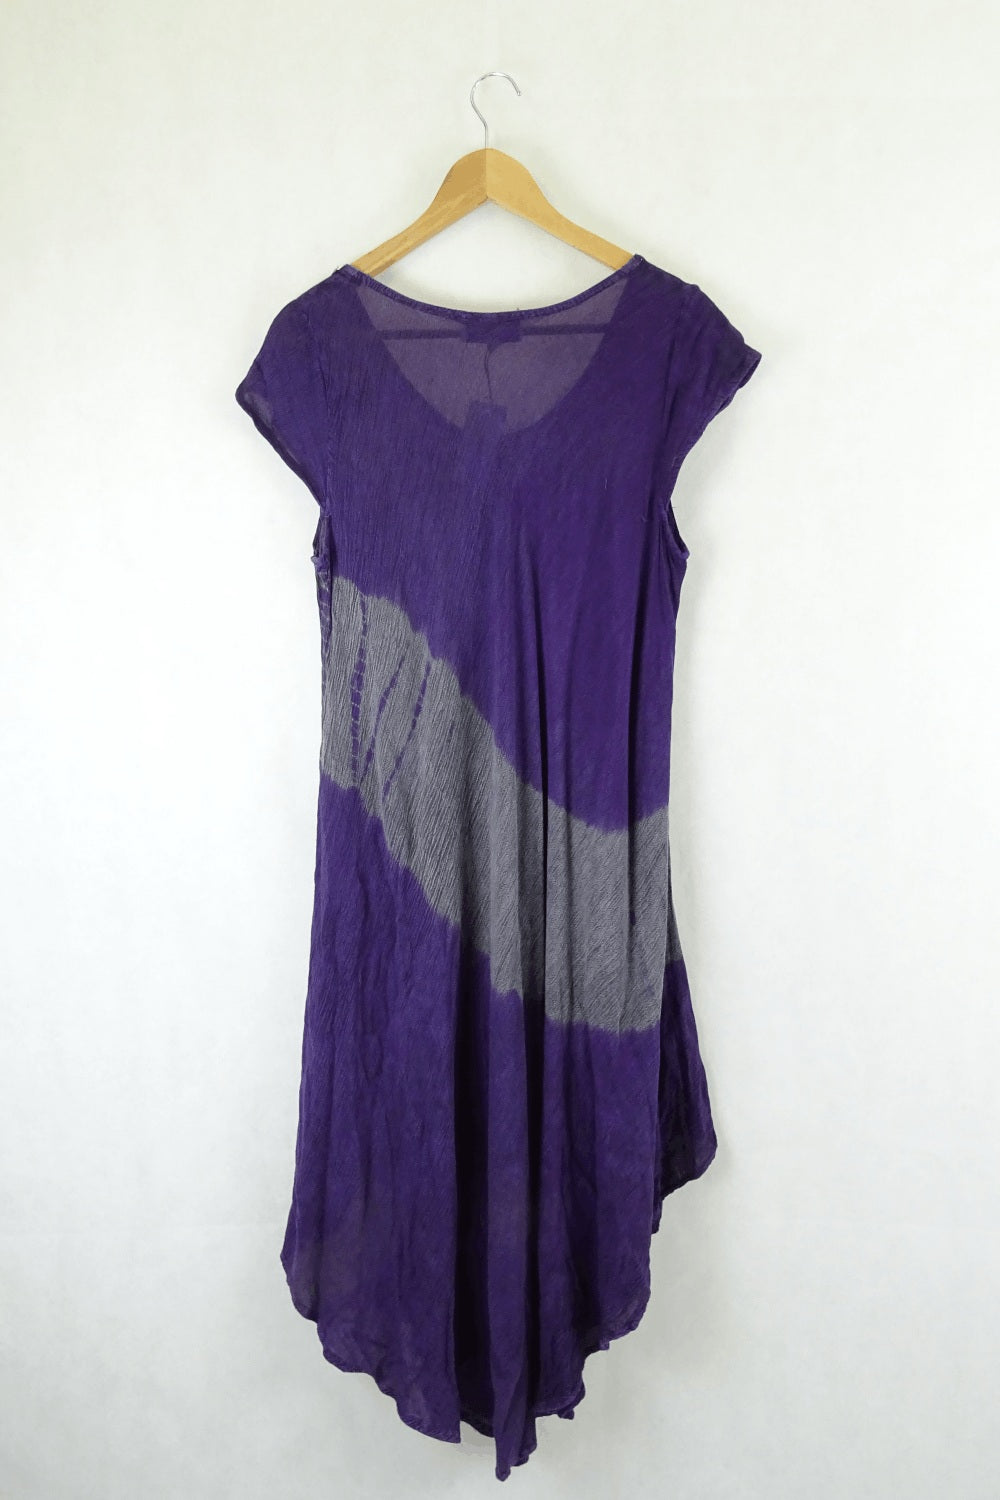 Samsaara Purple Dress One Size